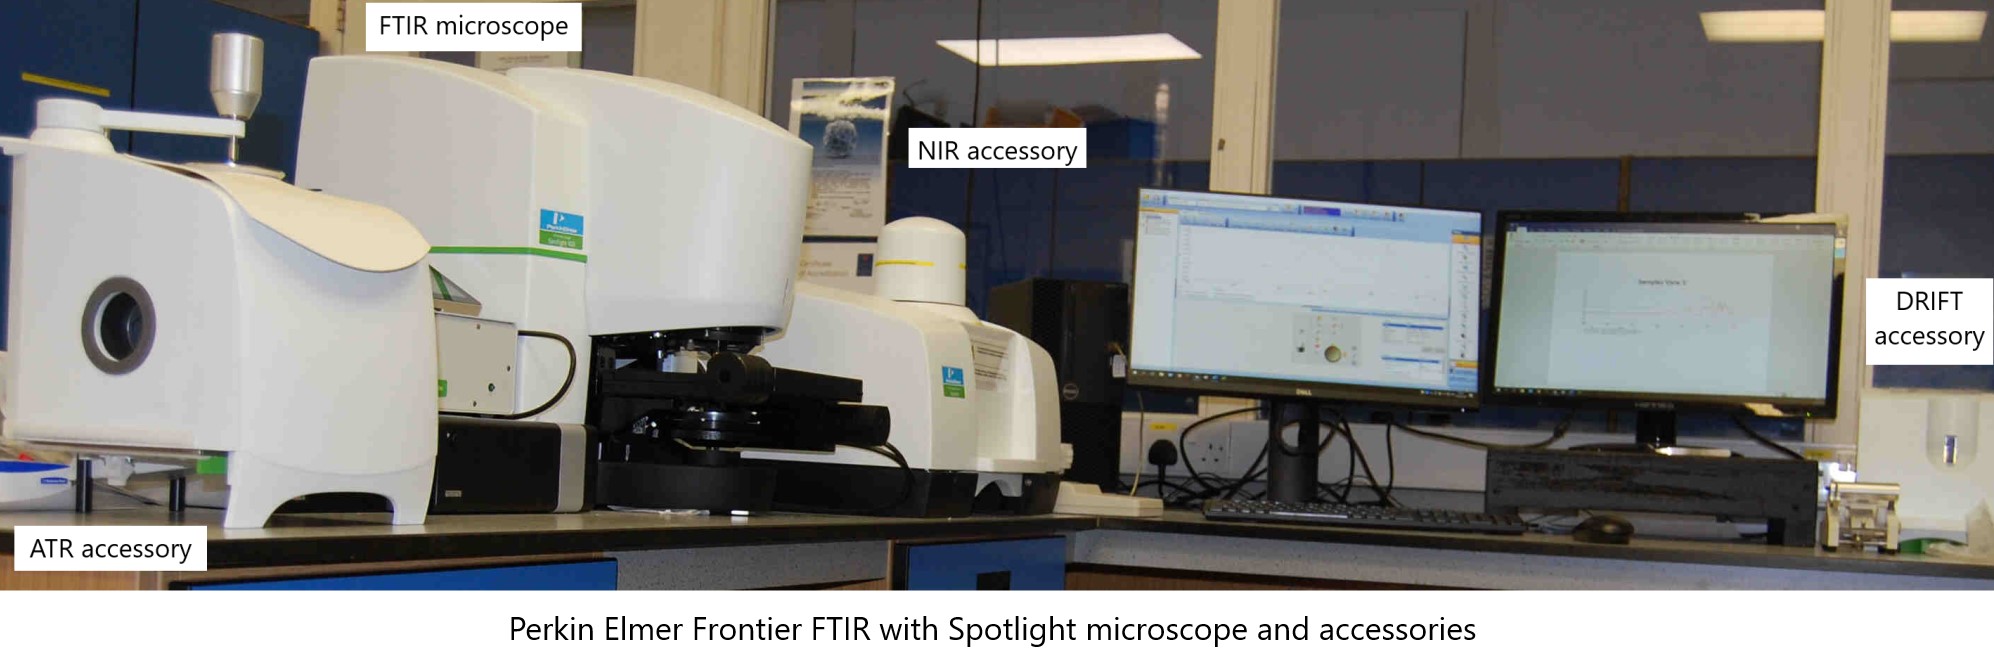 Perkin Elmer FTIR with Spotlight Microscope Accessories